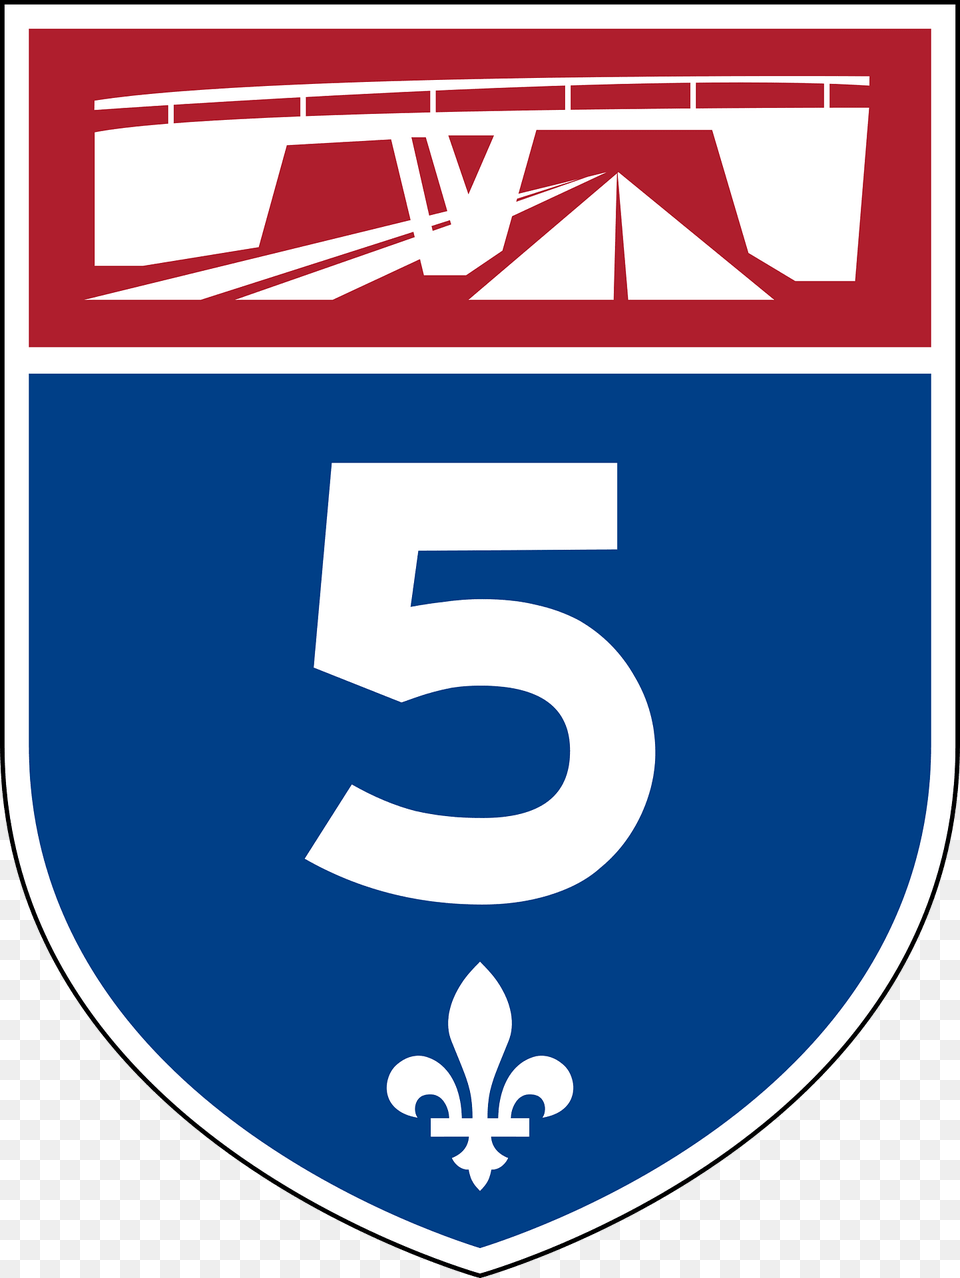 Nationalhighwayshields Sign In Quebec Clipart, Armor Png